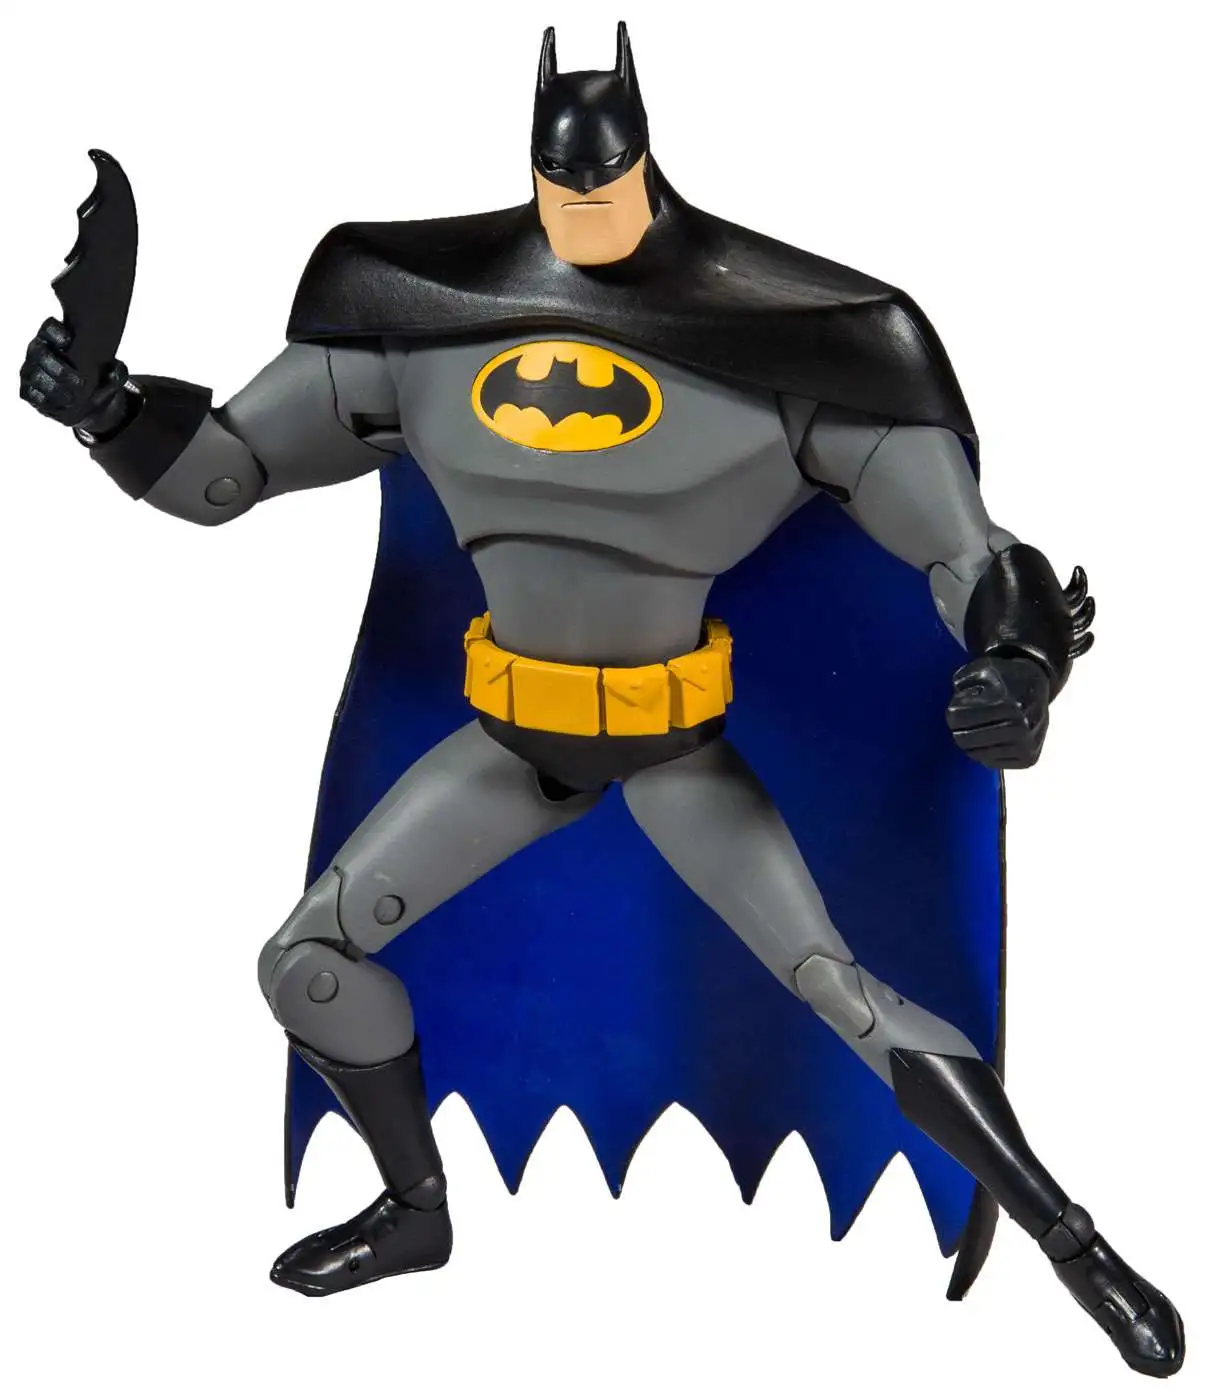 McFarlane Toys DC Multiverse Batman Action Figure [The Animated Series, Black Cape]